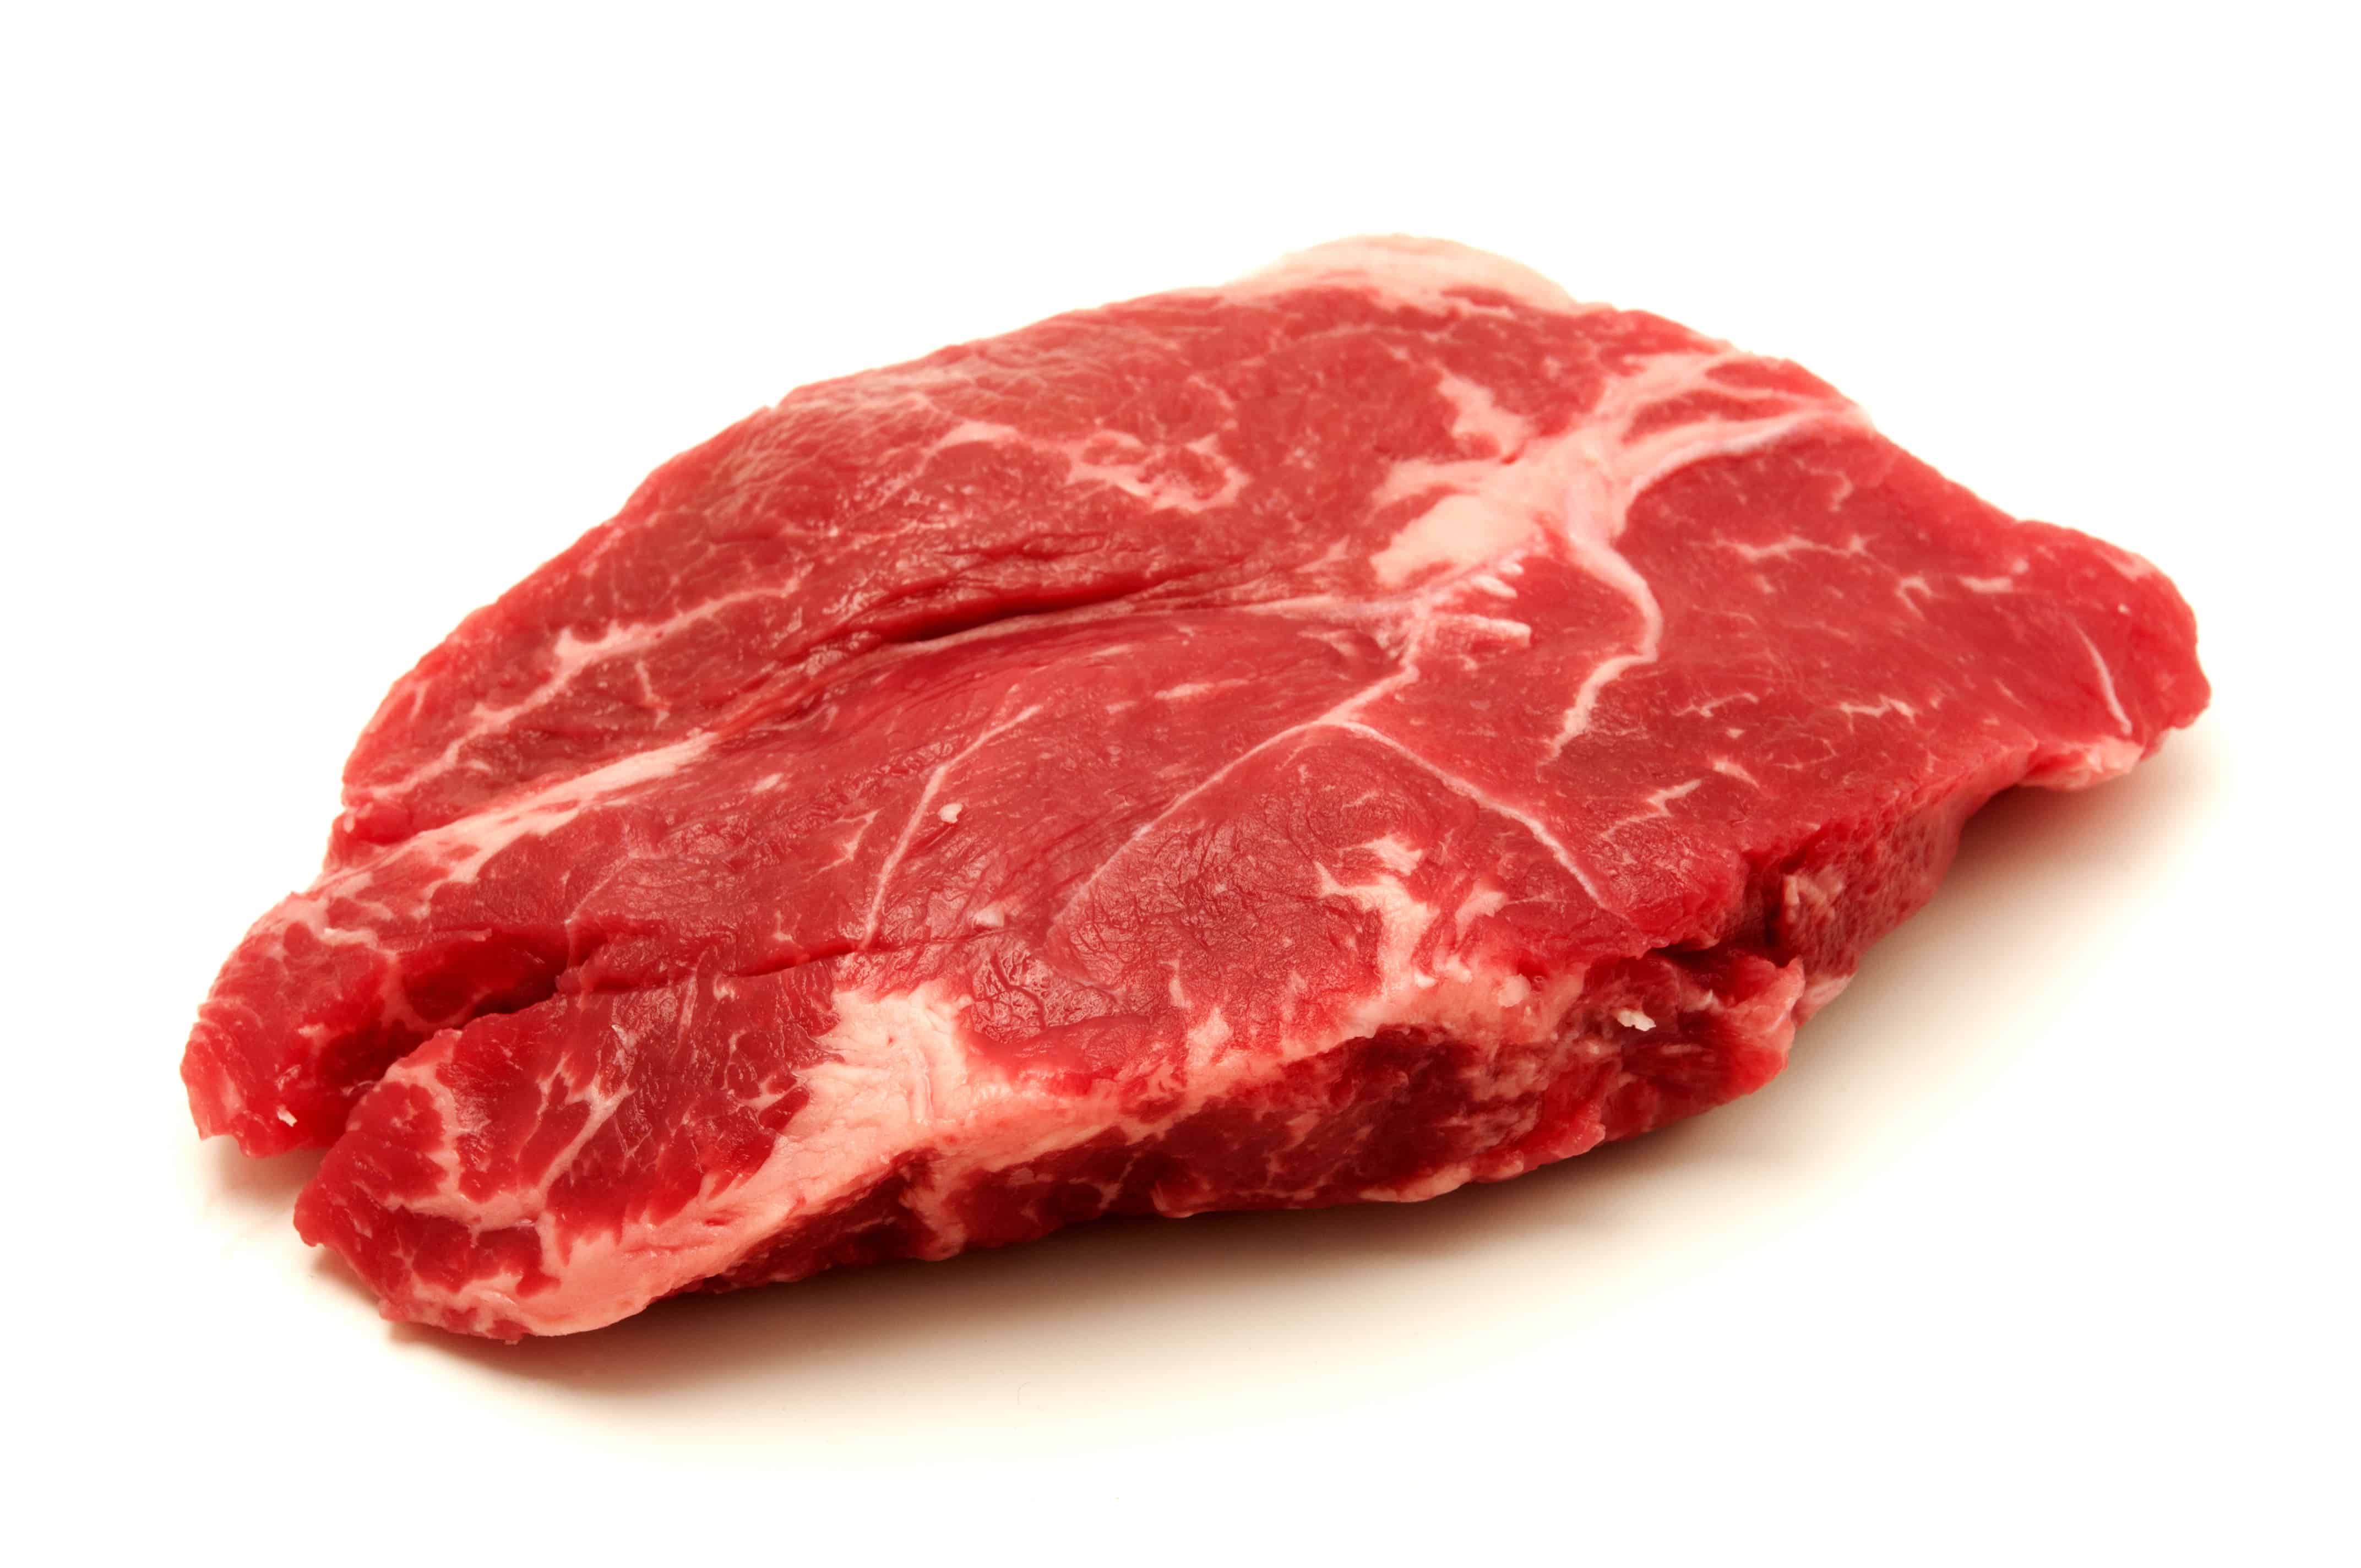 Raw sirloin steak on a white background